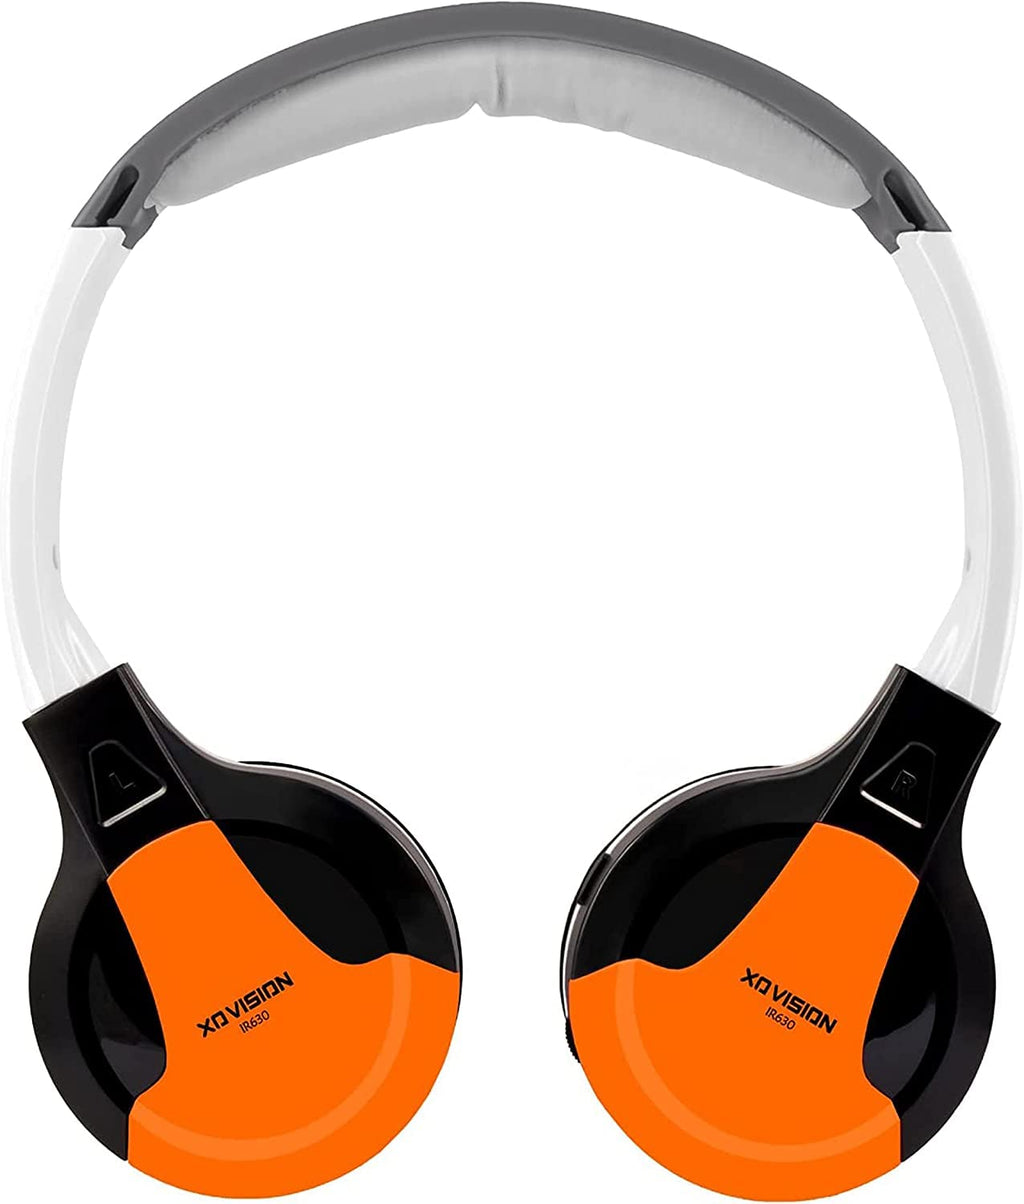  [AUSTRALIA] - XO Vision IR630OR Universal IR Wireless Foldable Headphones - Orange Wireless Bluetooth-Enabled Lightweight Portable for iPhone, Car, Kids Wireless Headphones for Universal Car Entertainment System